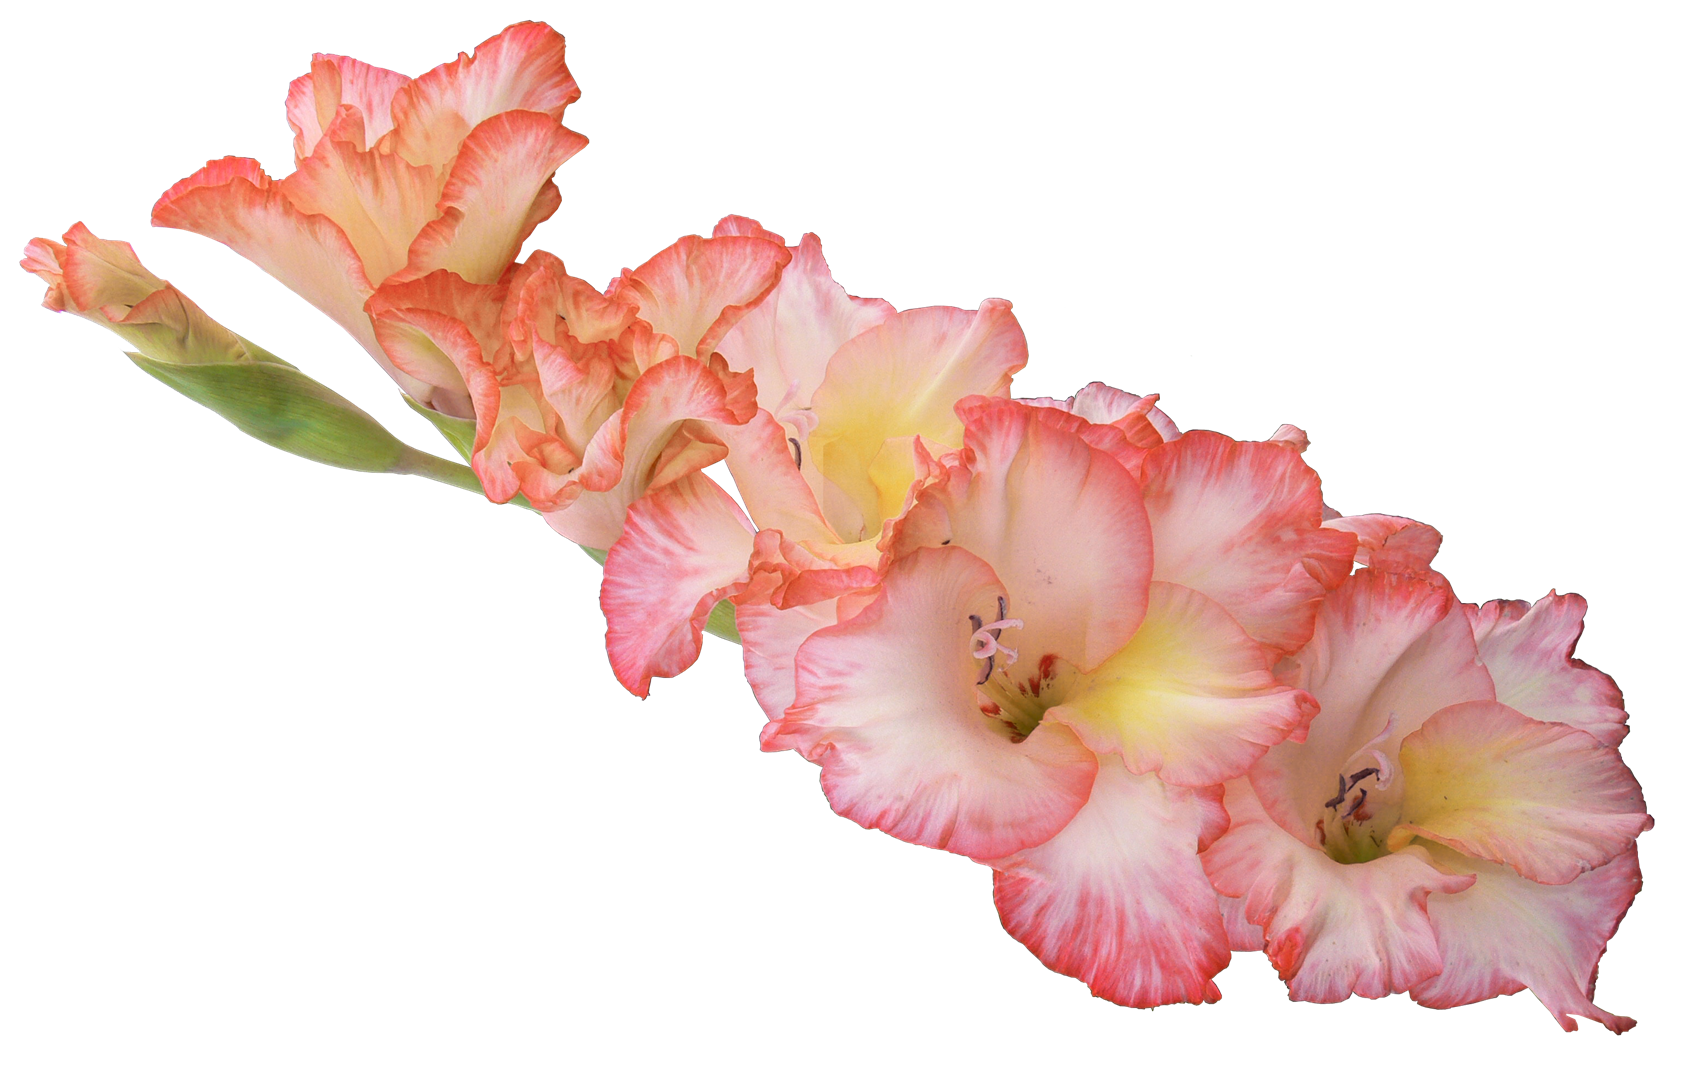 Iris Flower PNG HD - 138979